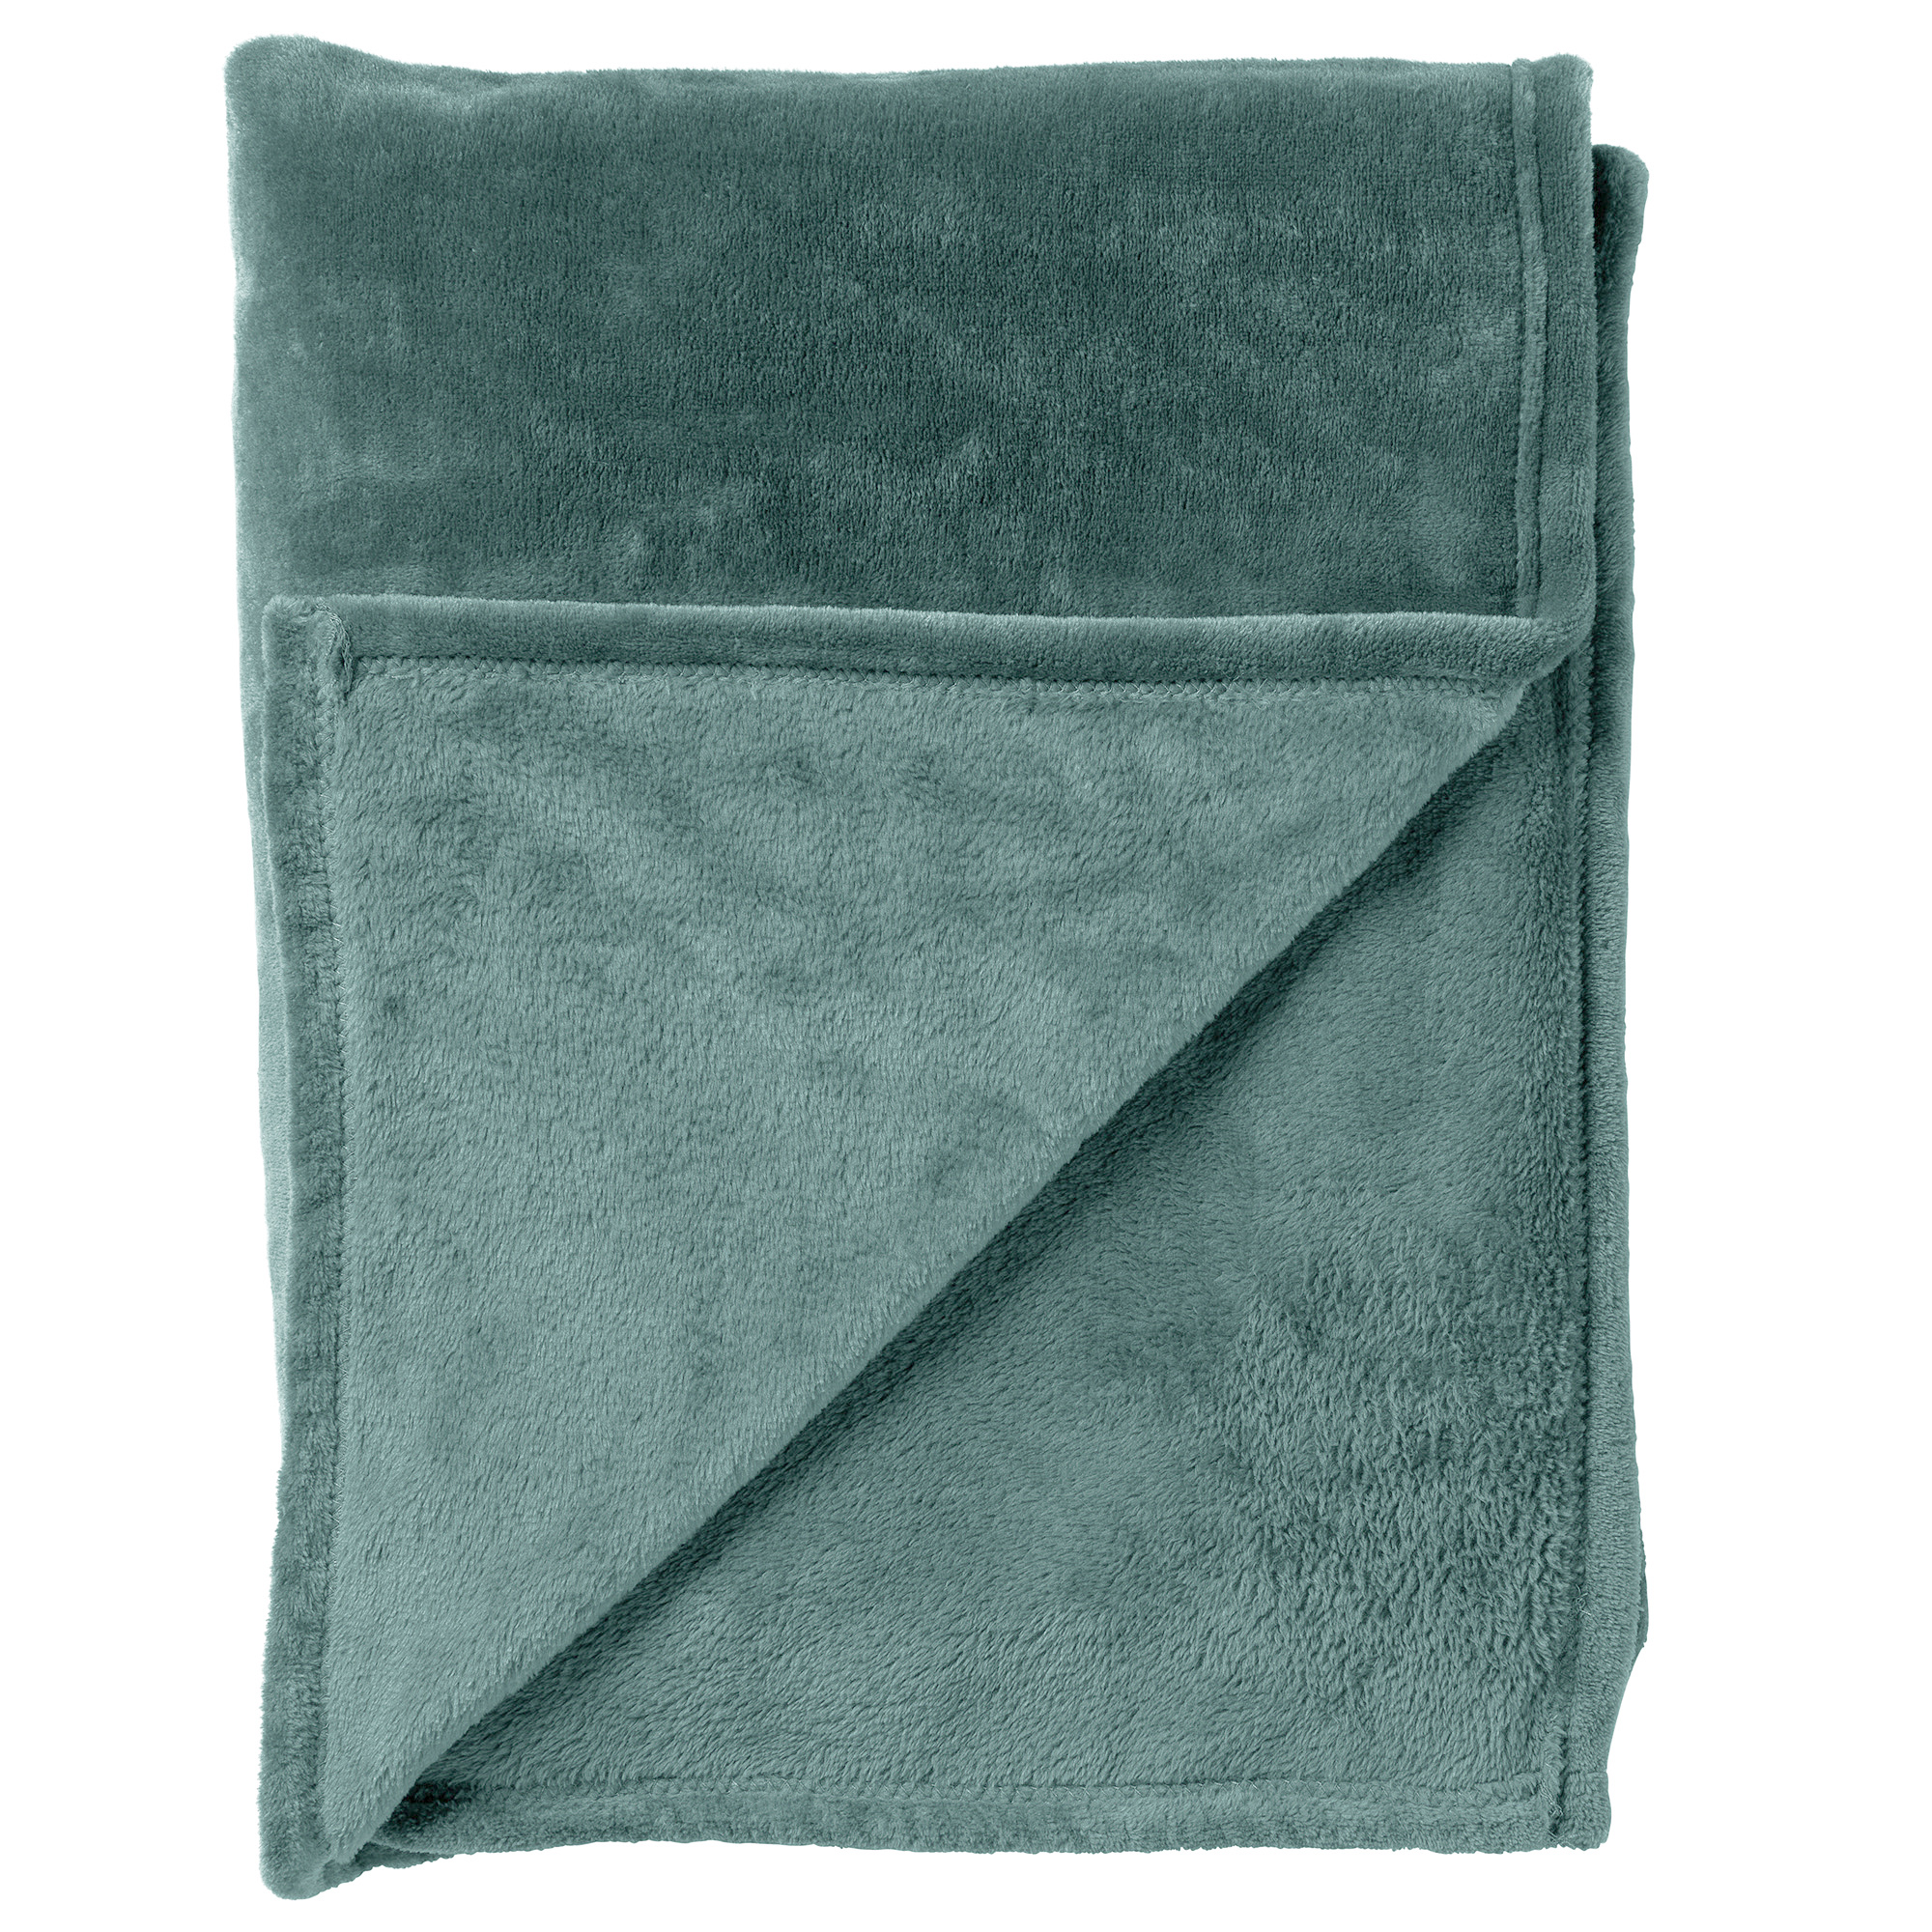 CHARLIE - Plaid 200x220 cm - extra grote fleece deken - effen kleur - Sagebrush Green - groen